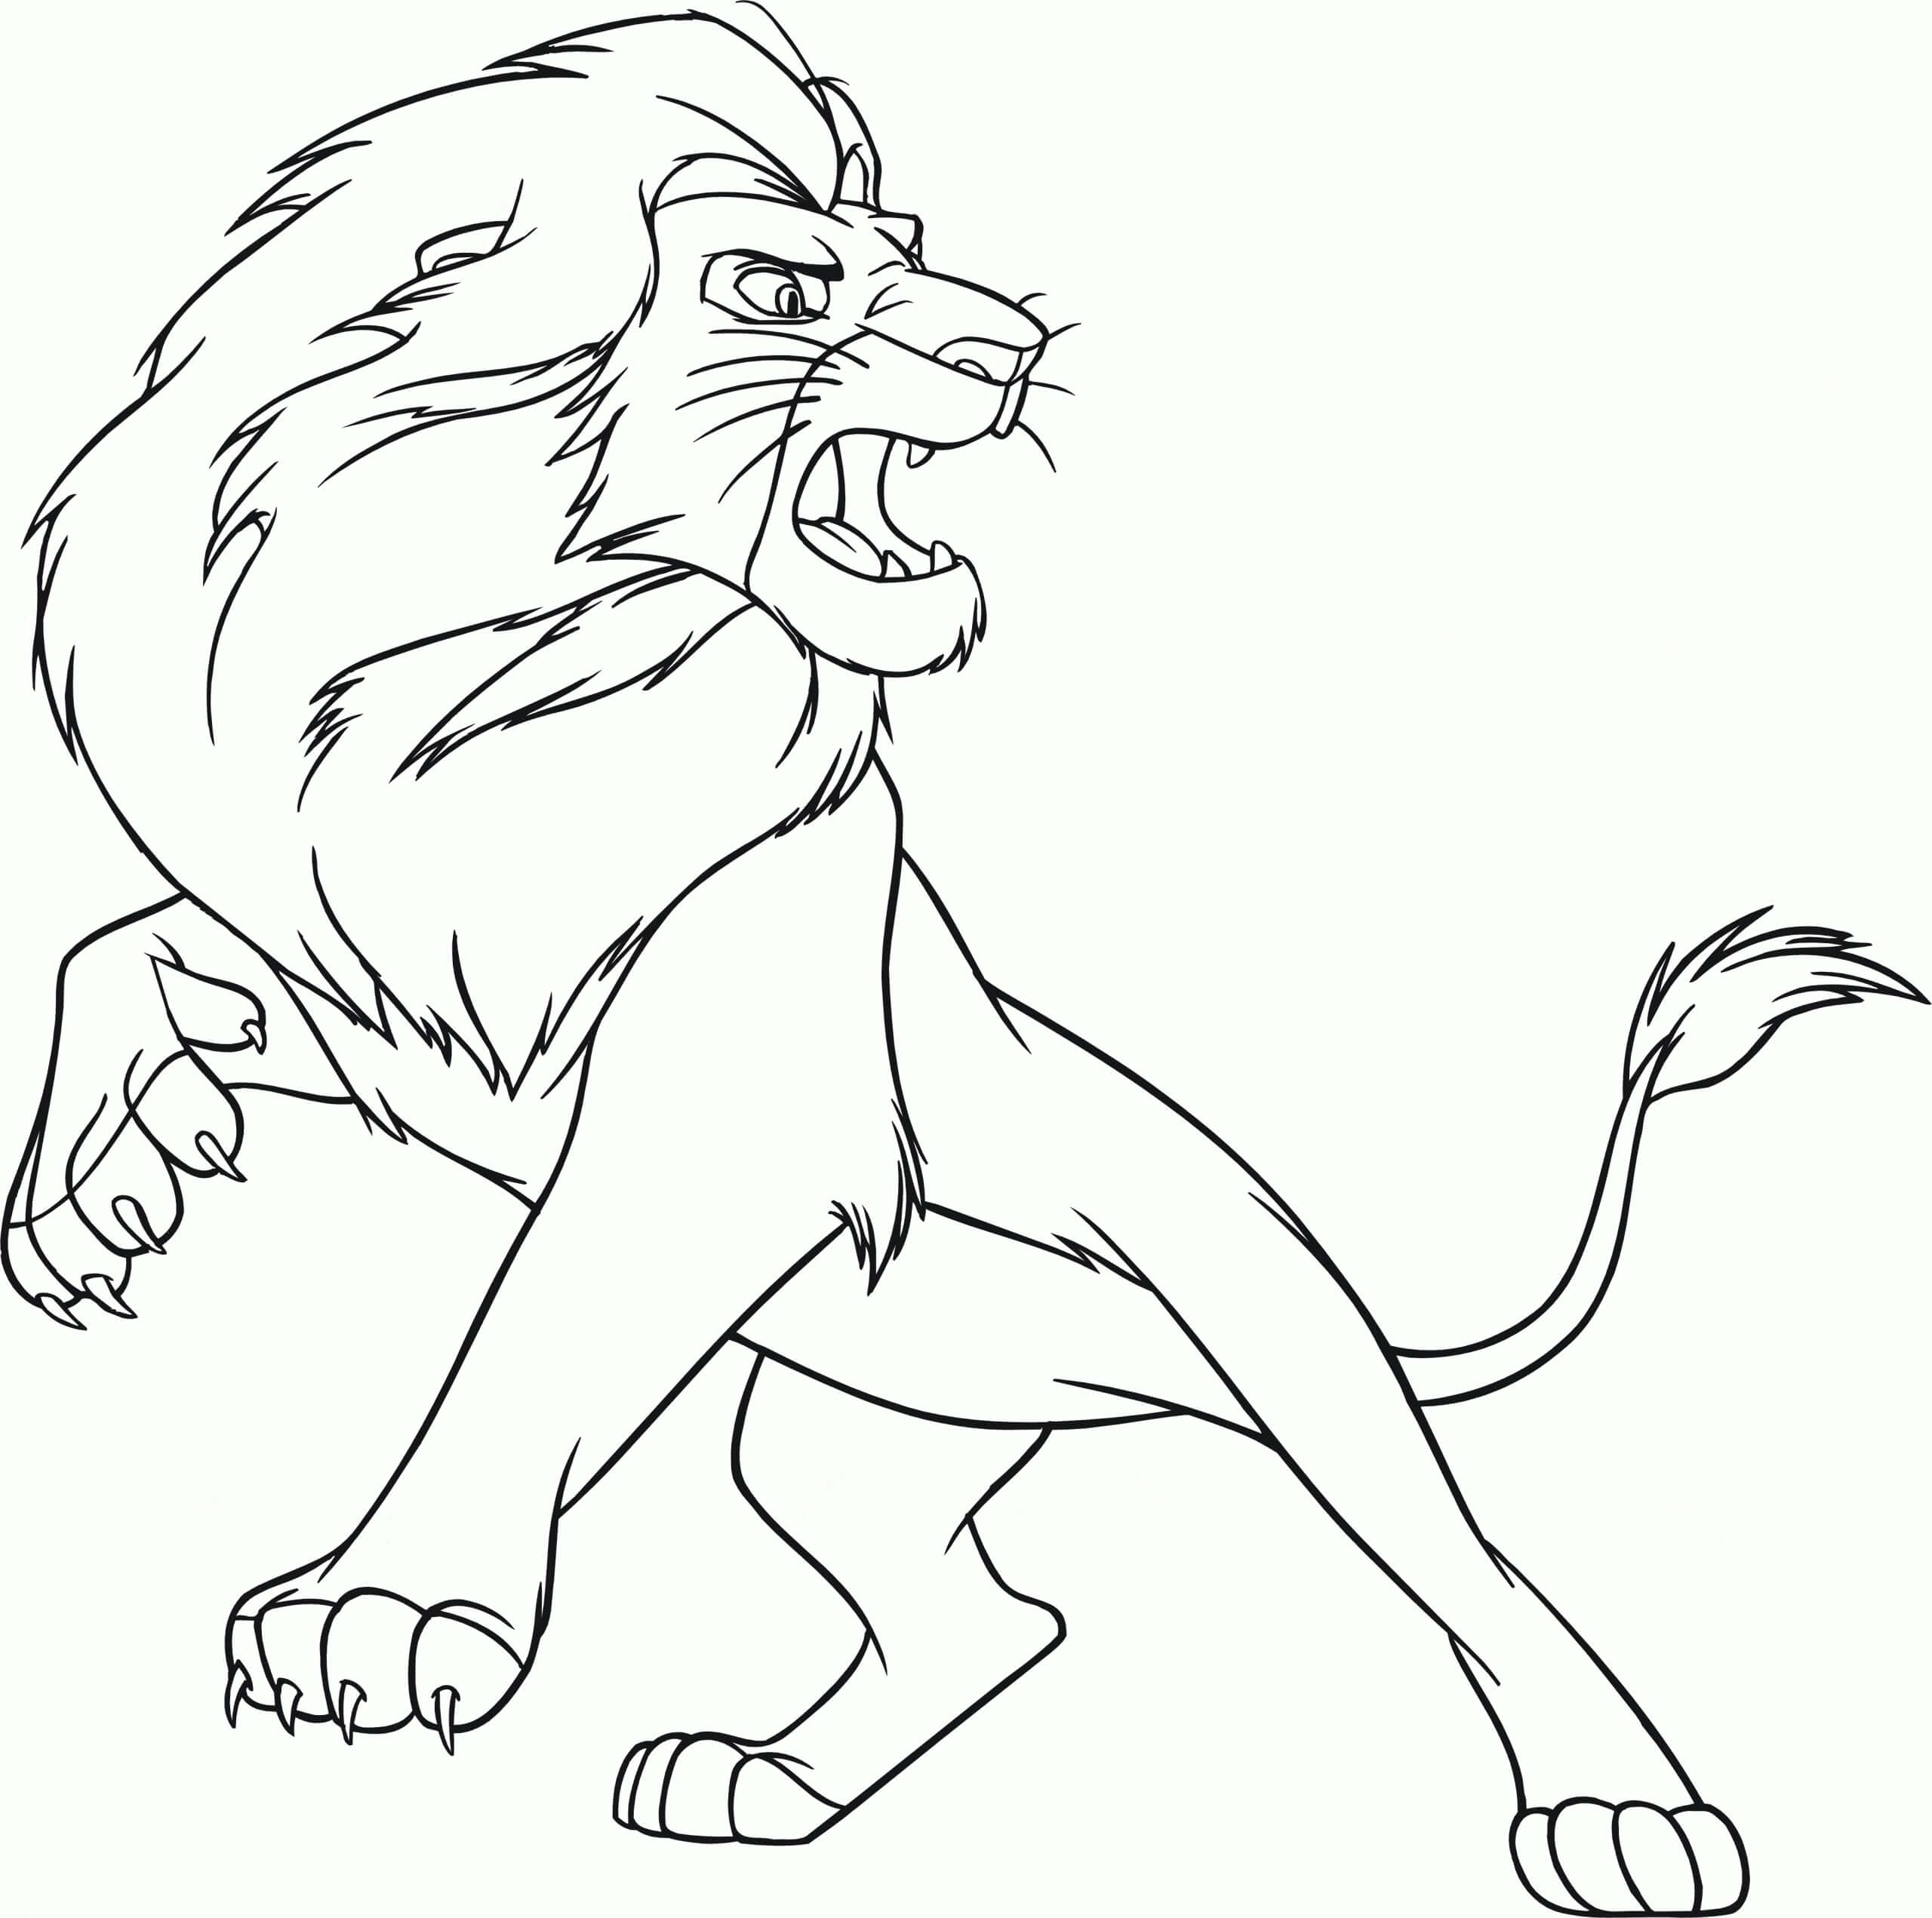 Majestuoso León para colorir